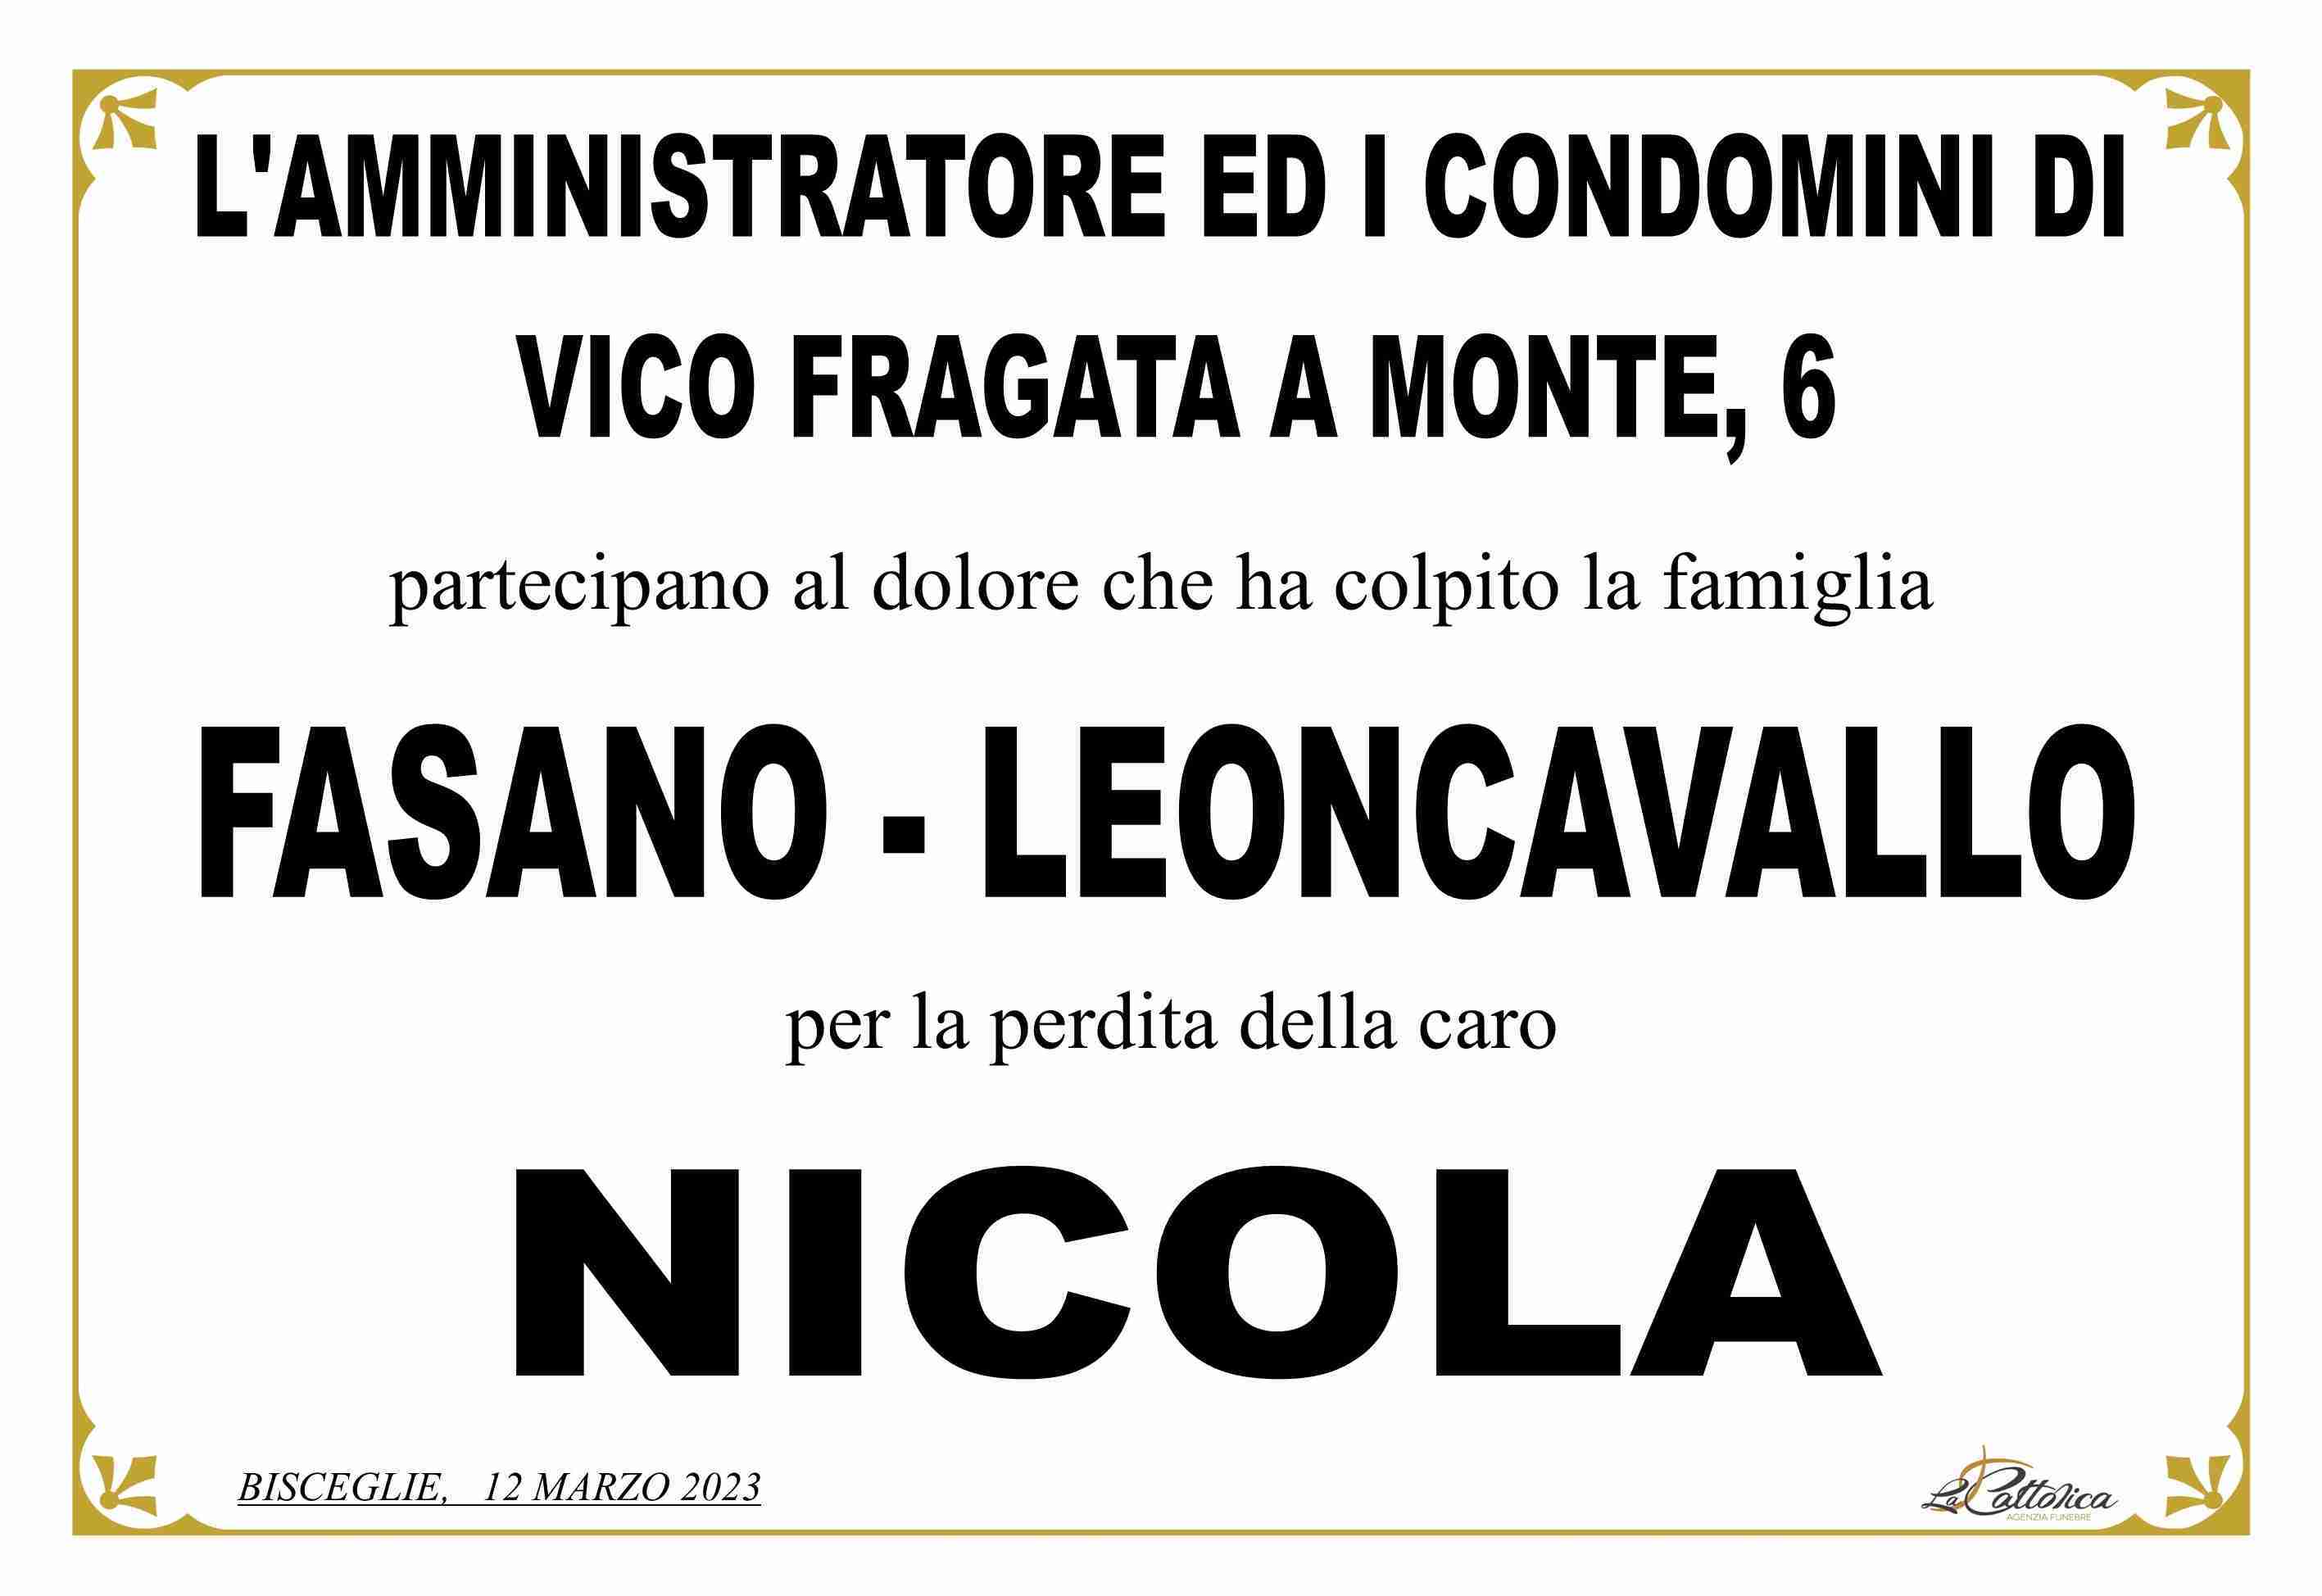 Nicola Leoncavallo